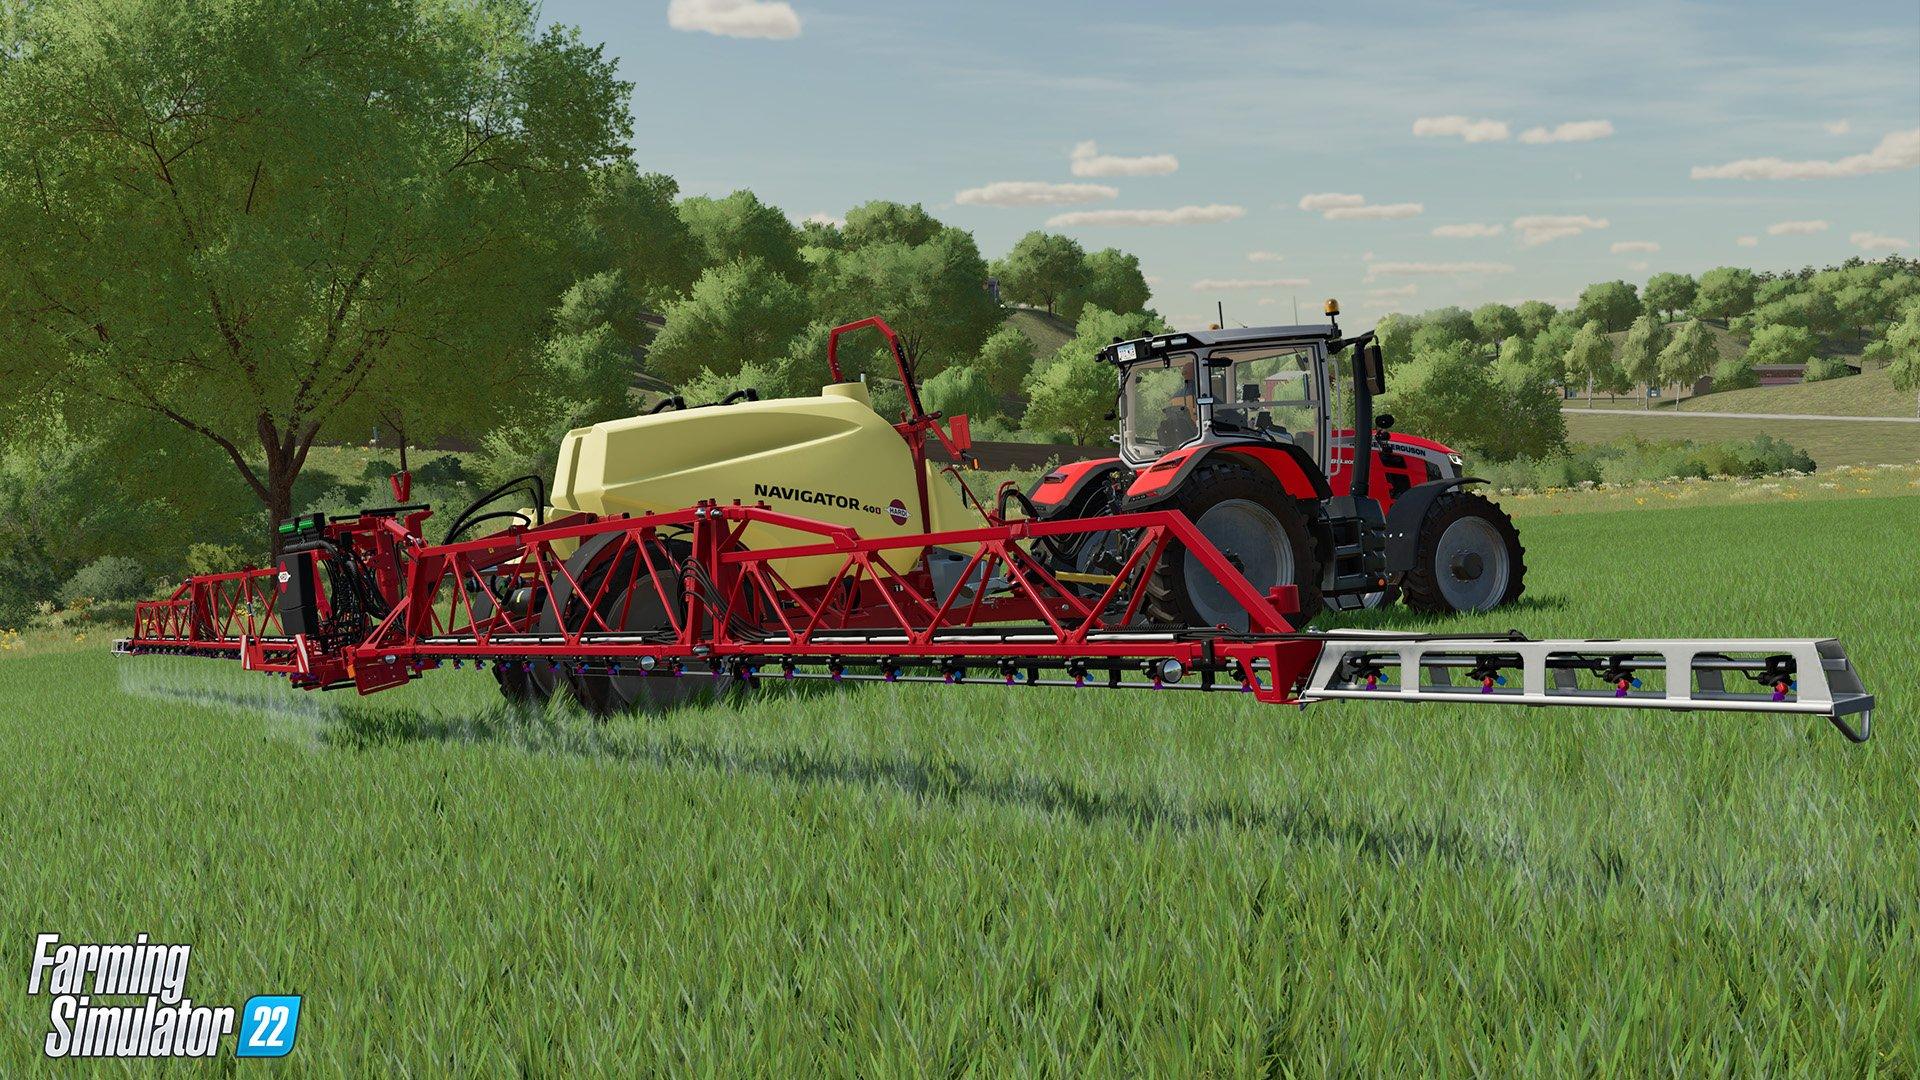 Farming Simulator 22 - YEAR 1 Bundle Xbox One e Series X